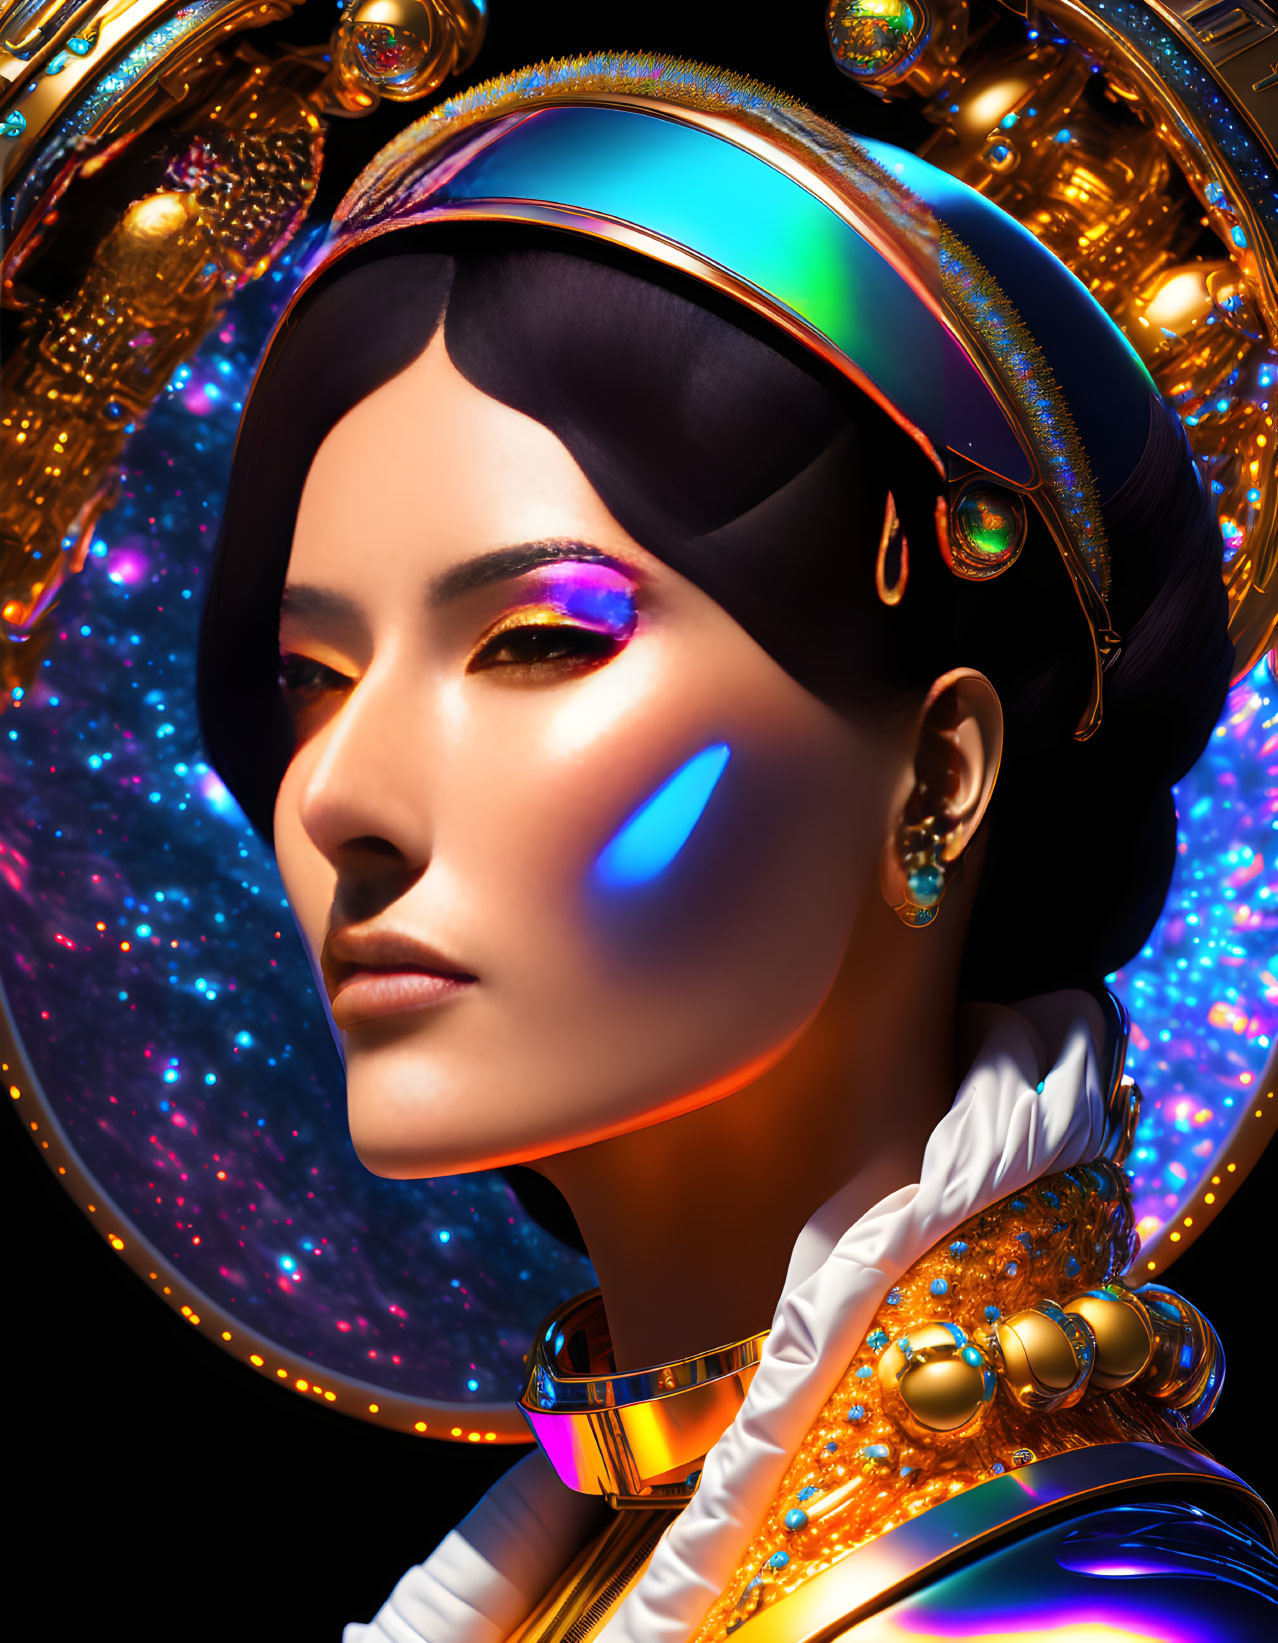 Futuristic digital art portrait of woman in cosmic attire